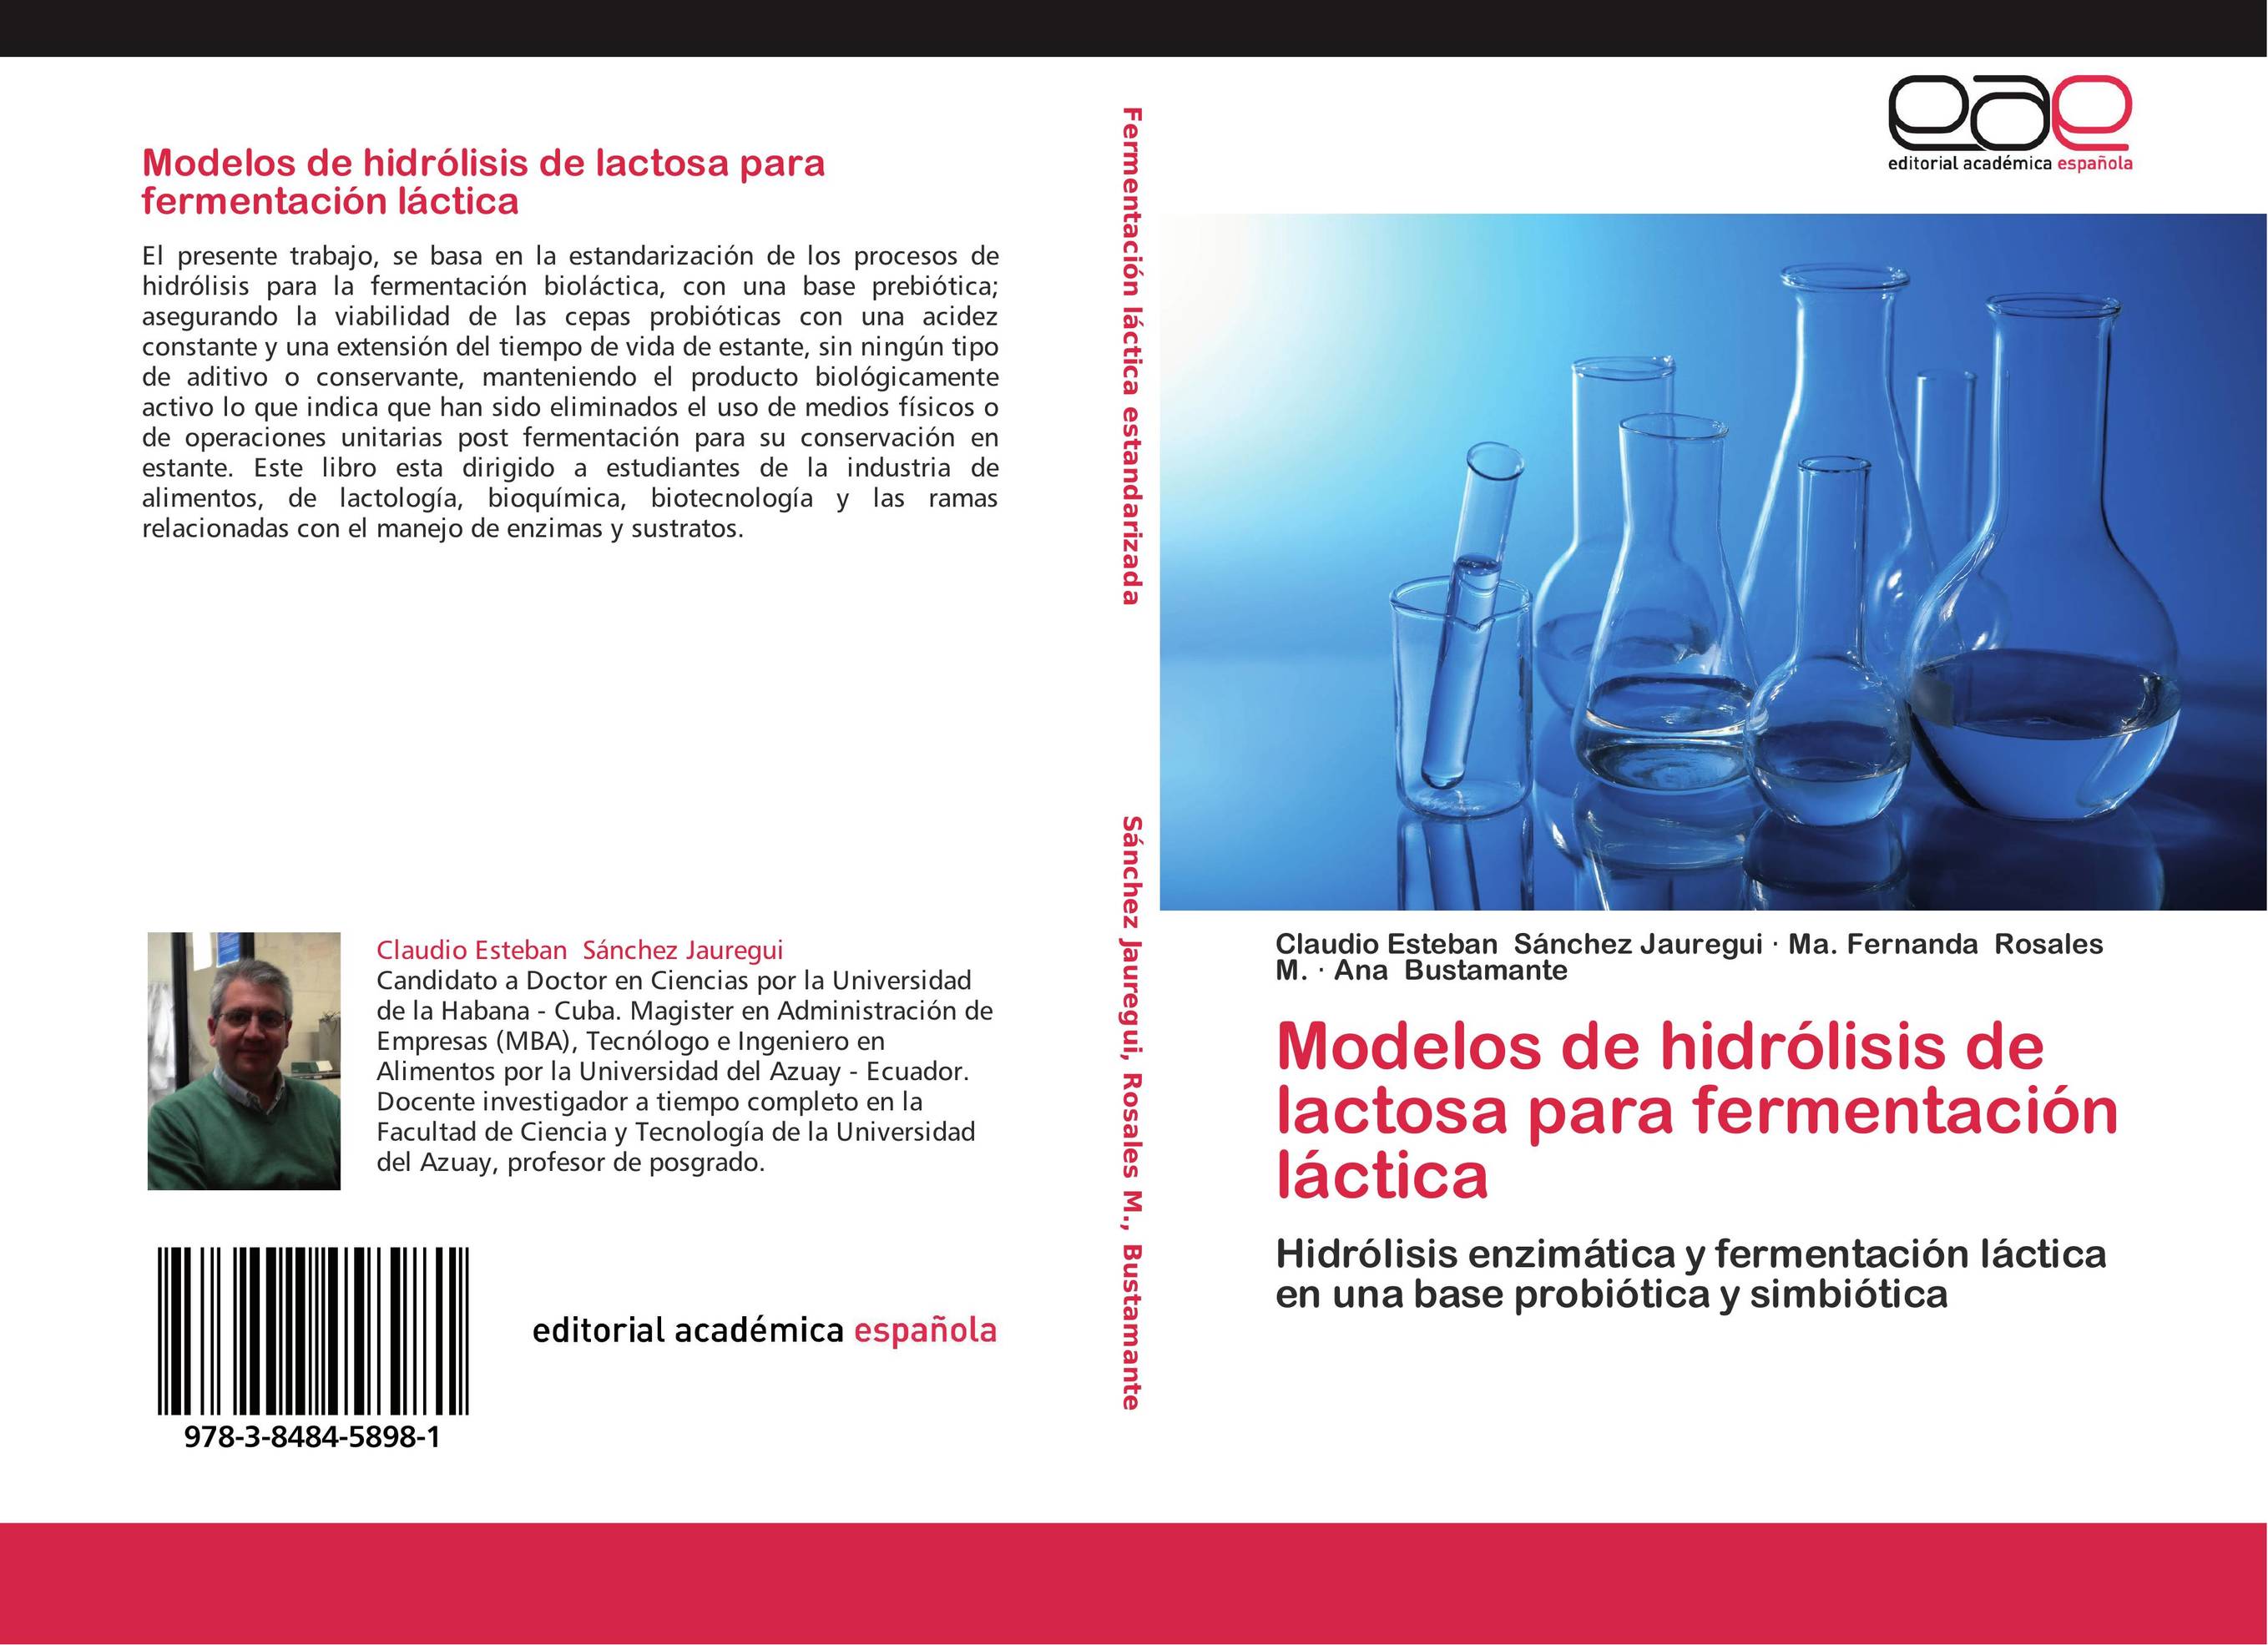 Modelos de hidrólisis de lactosa para fermentación láctica